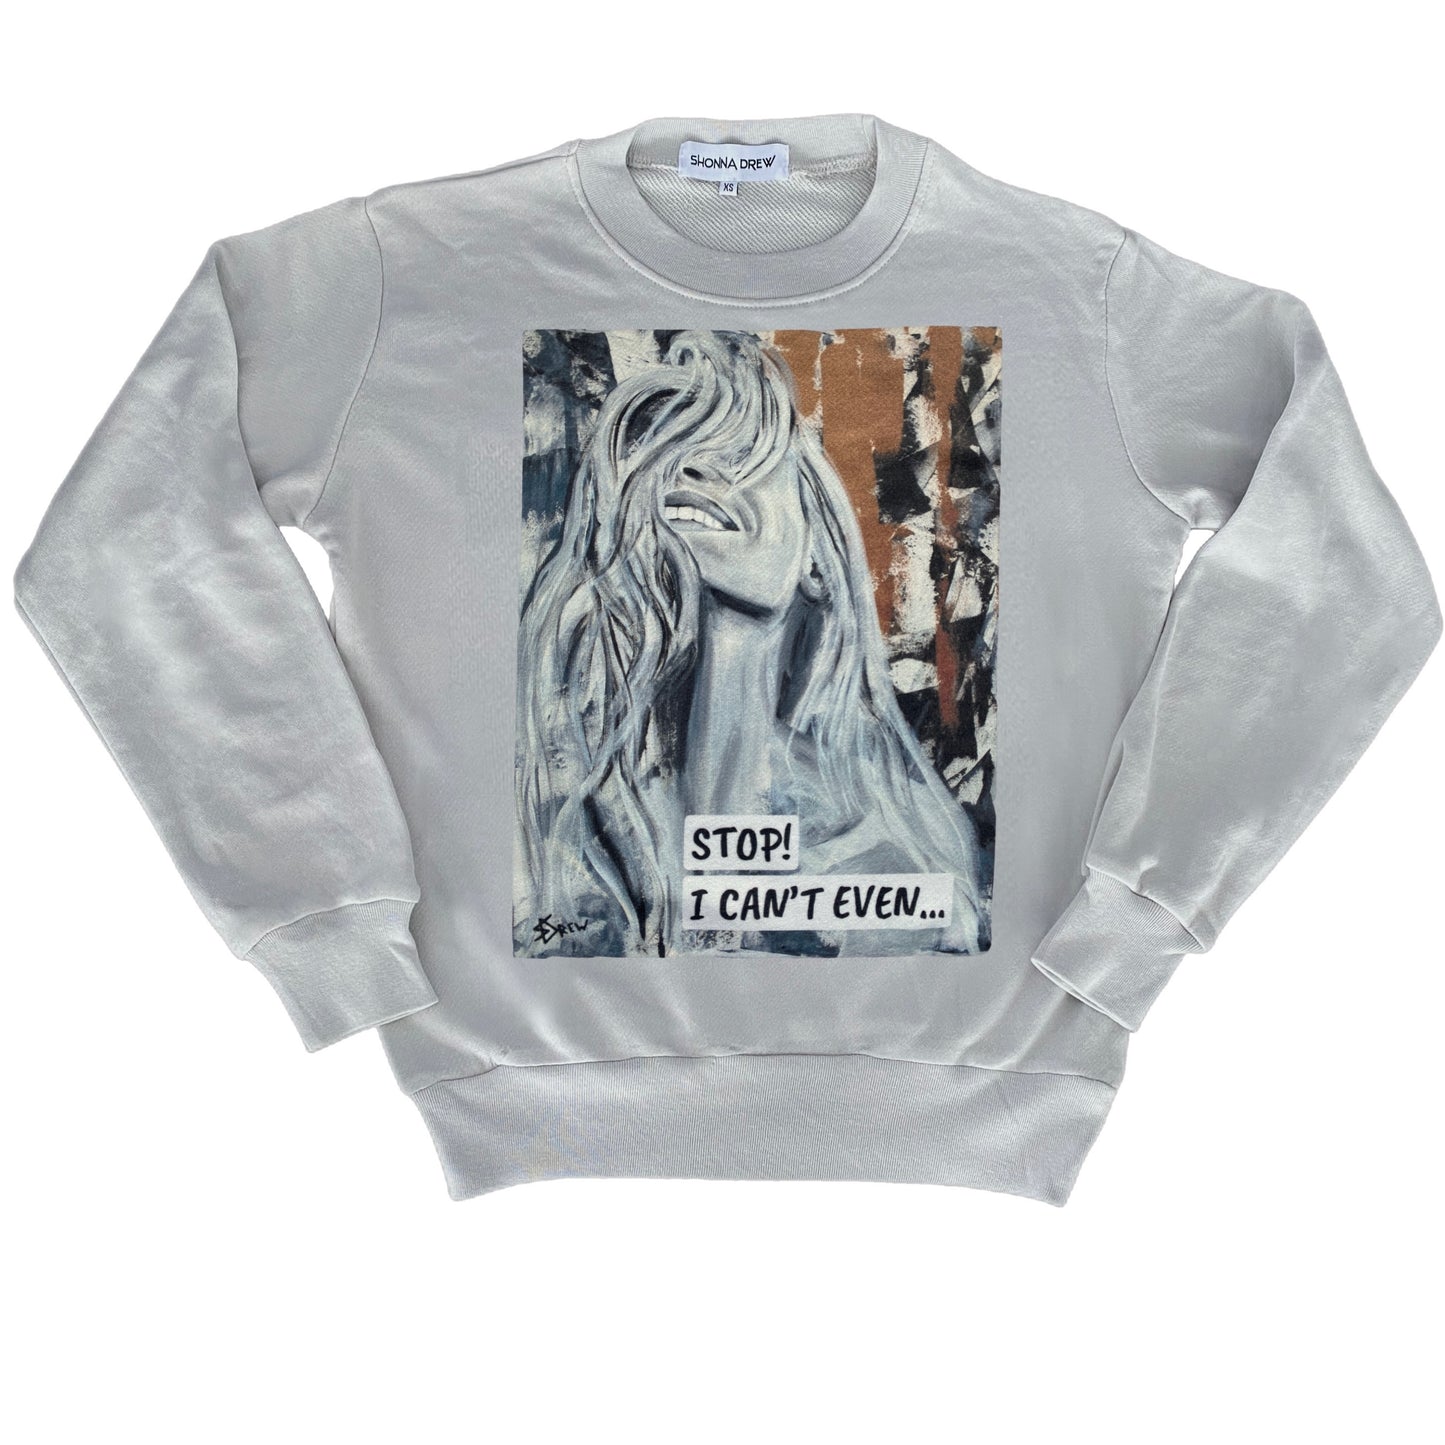 “I CAN’T EVEN…." 1989 Sweatshirt